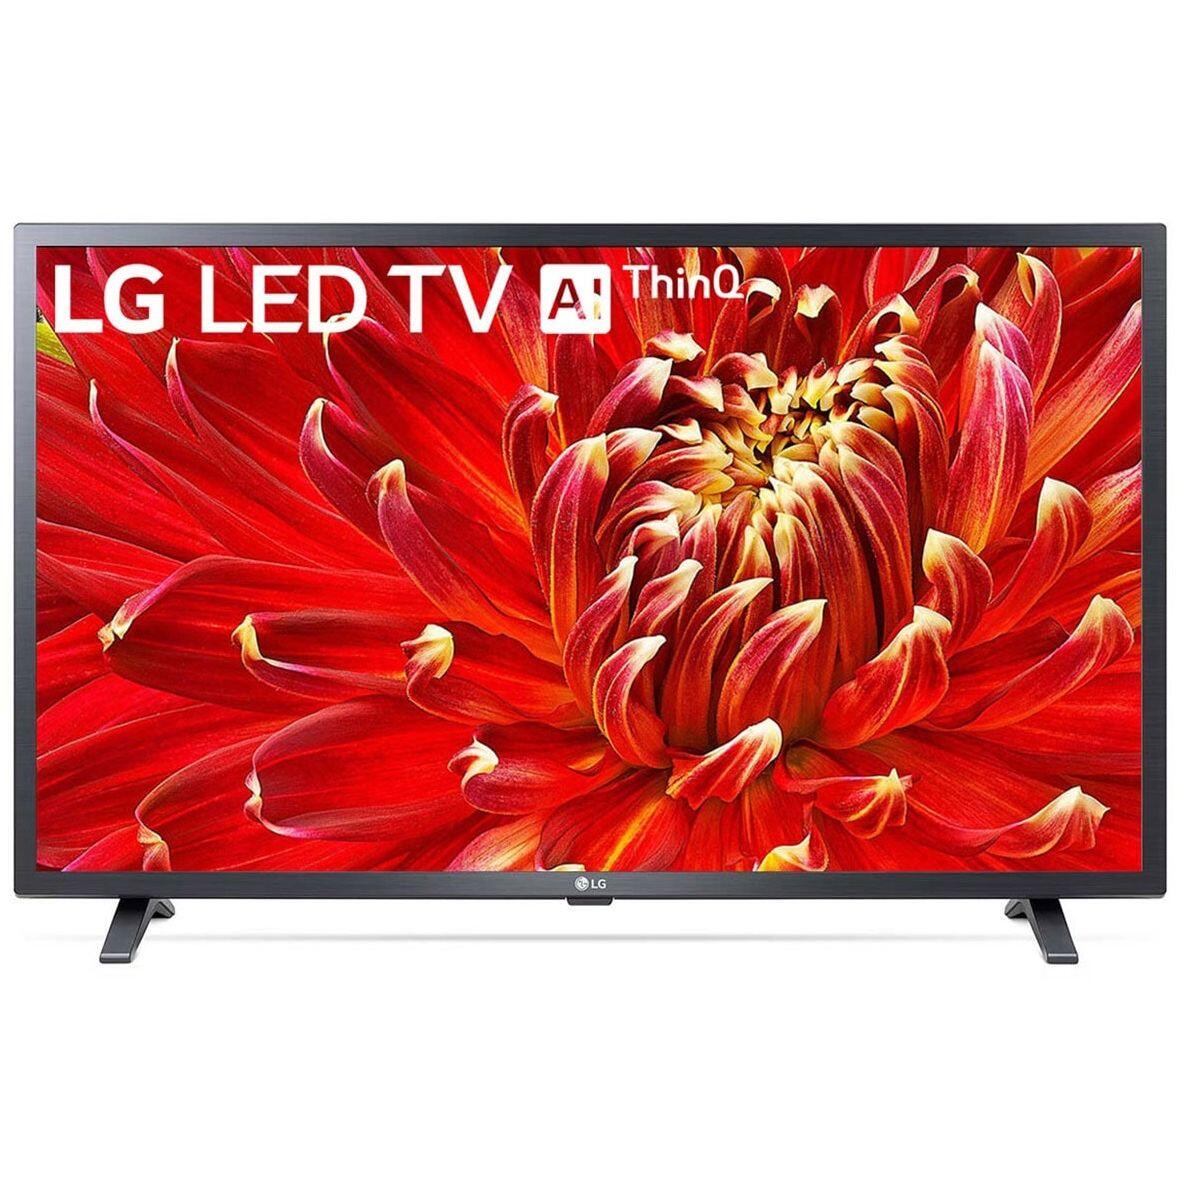 LG 32 Inch HD Smart LED TV with Built-in Receiver, LG tv, تلفزيون سمارت ال جي 32 بوصة LED، بدقة HD، بريسيفر داخلي, شاشة ال جي